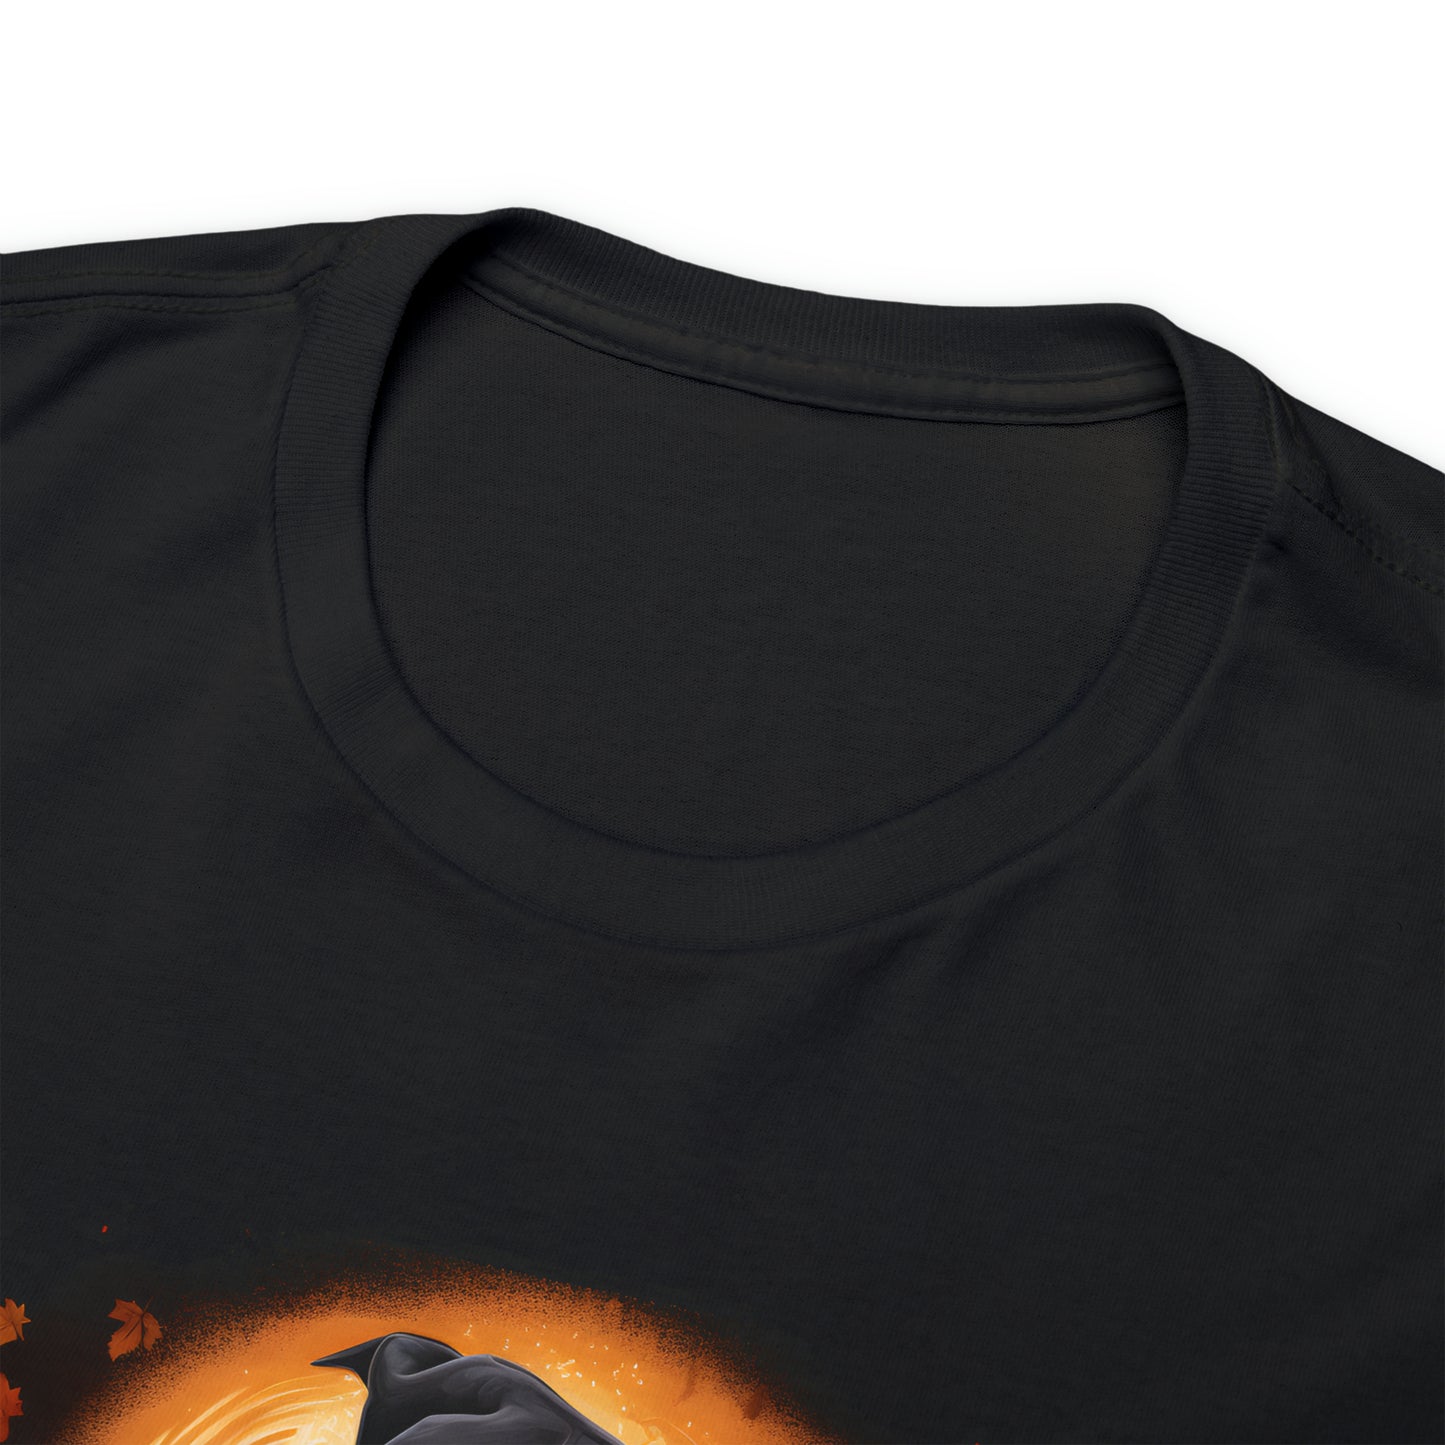 Dachshund Classic T-shirt: "Halloween Glow"